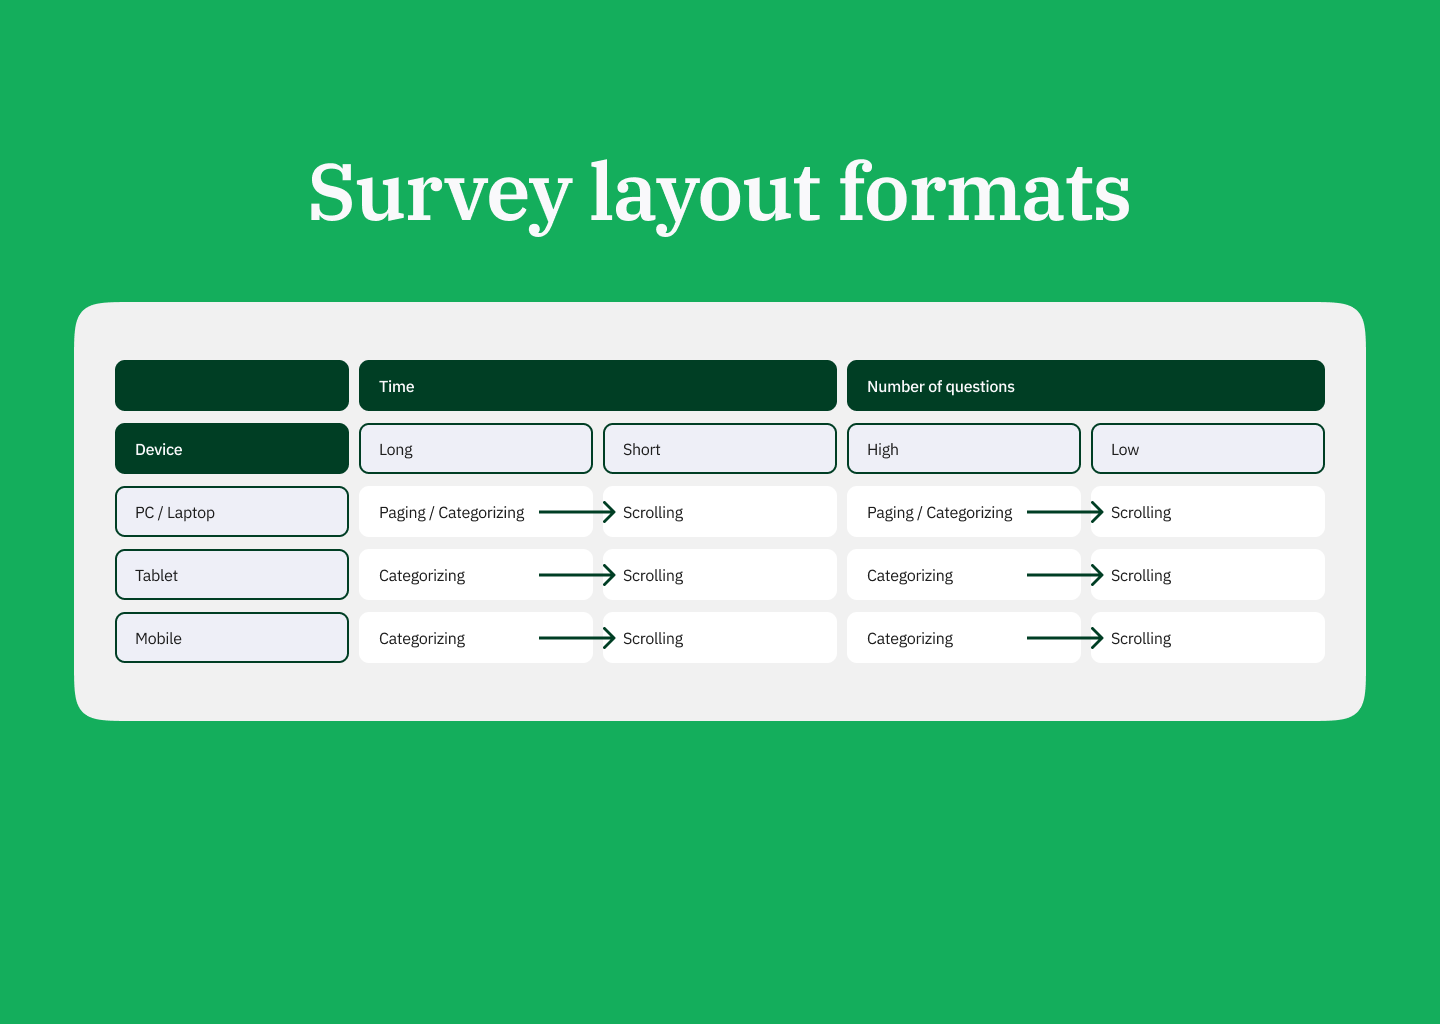 Survey layout formats